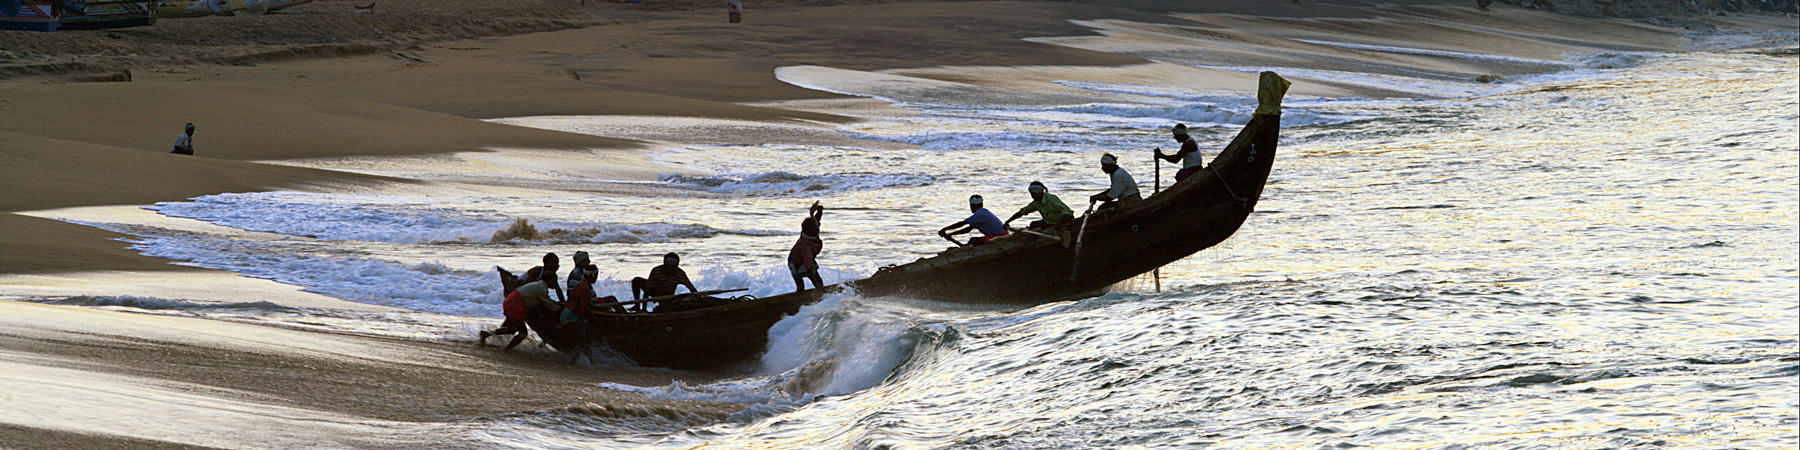 Inshore Fishing in Kerala, India - Photo Pêcheur d'Images